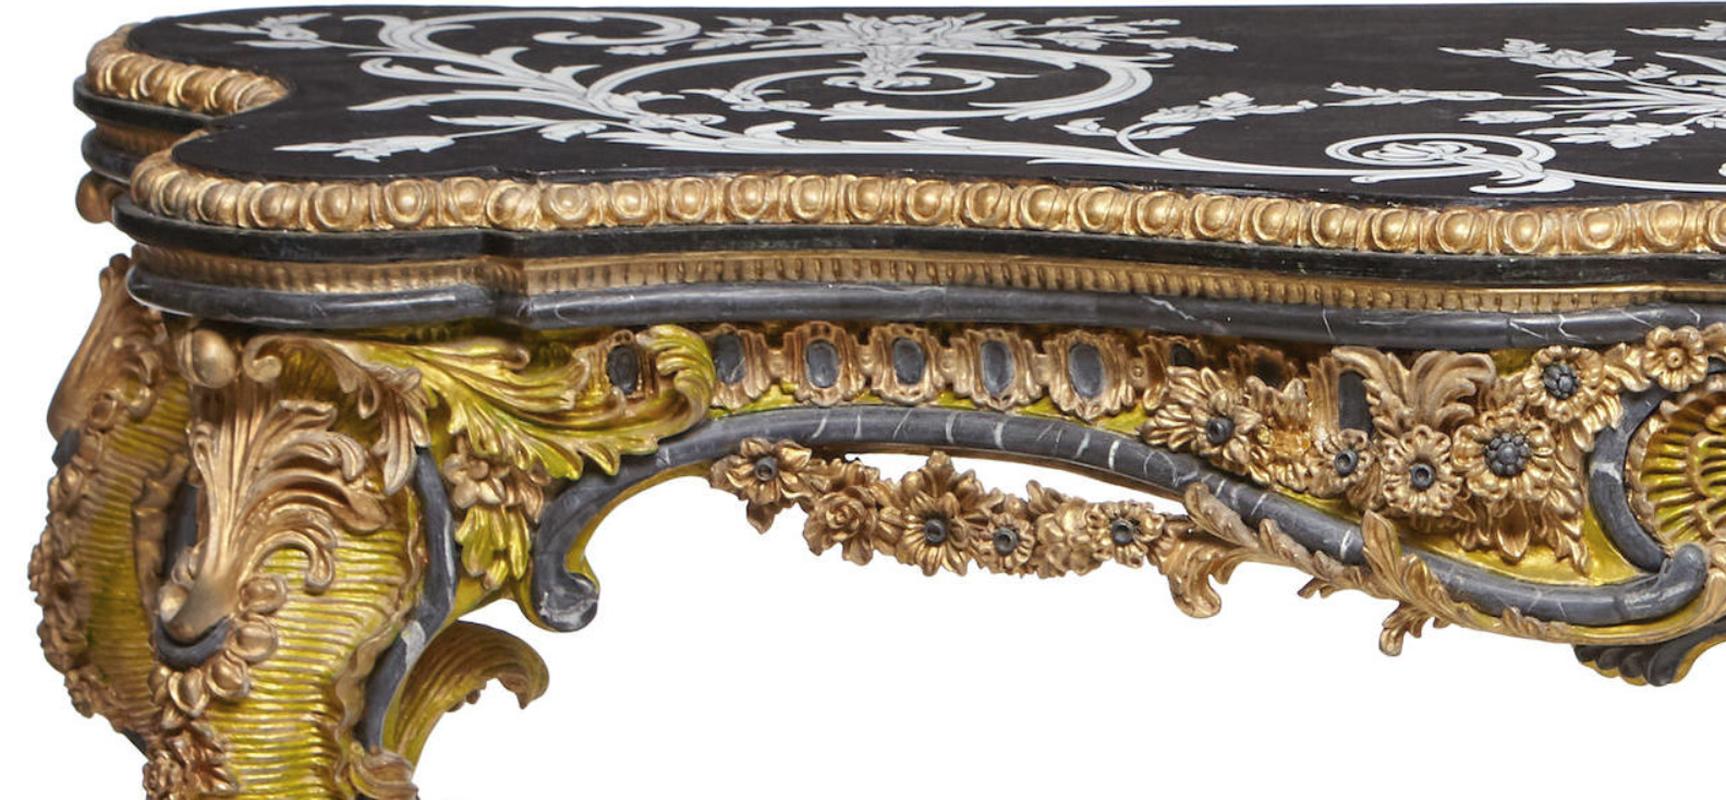 20th Century Italian Rococo Style Gilt Console Table